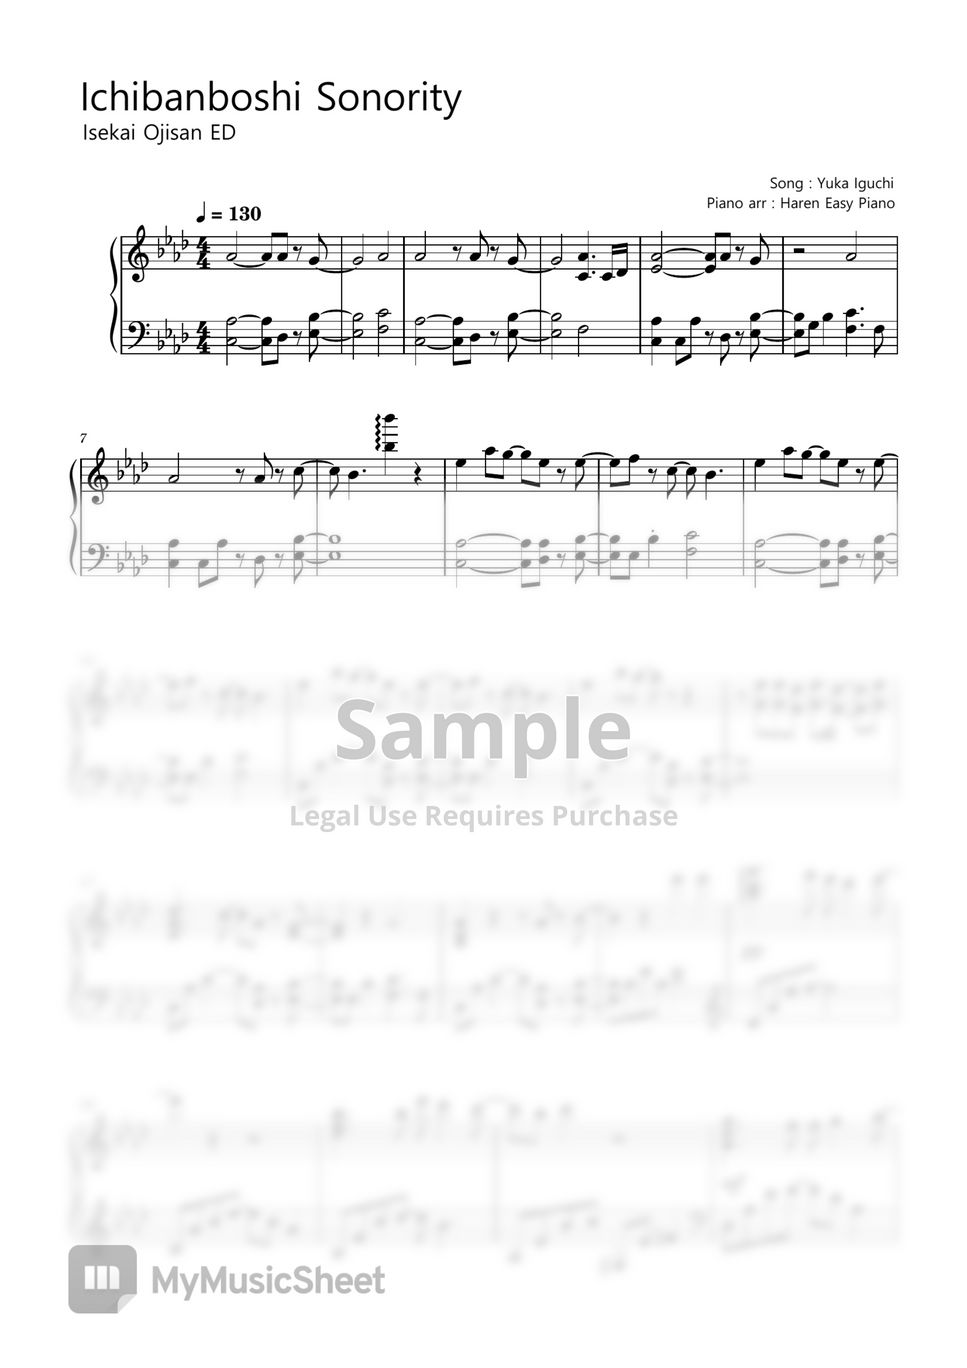 Isekai Ojisan ED - Ichibanboshi Sonority (Normal ver) by Haren Easy Piano